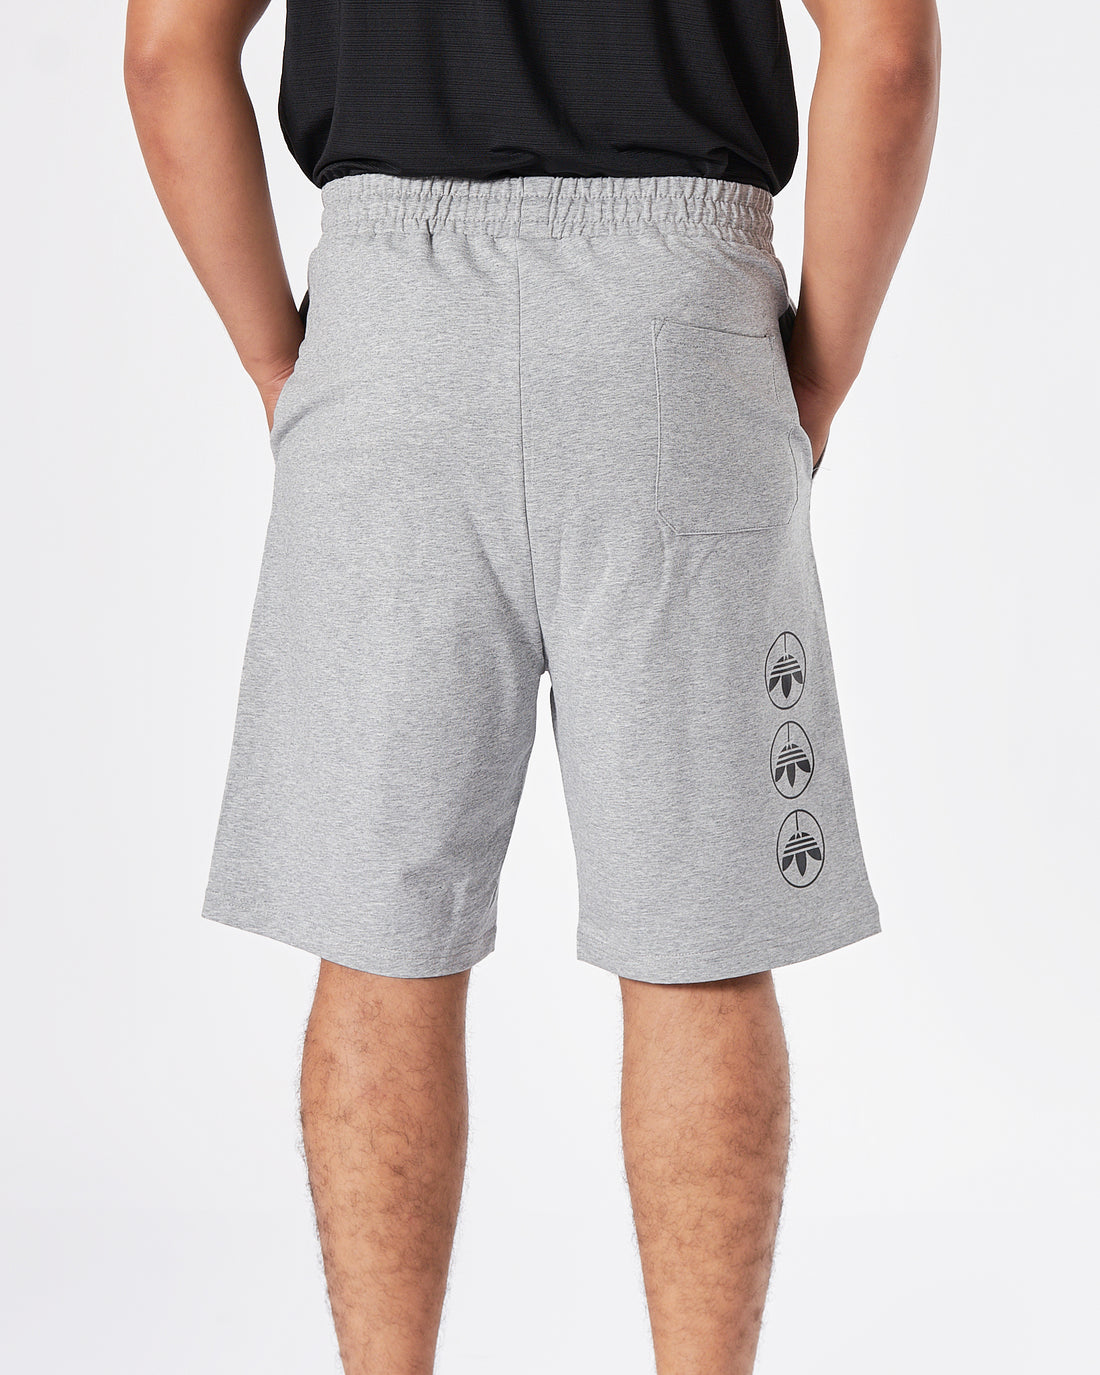 ADI Logo Printed Men Grey Shorts 16.90